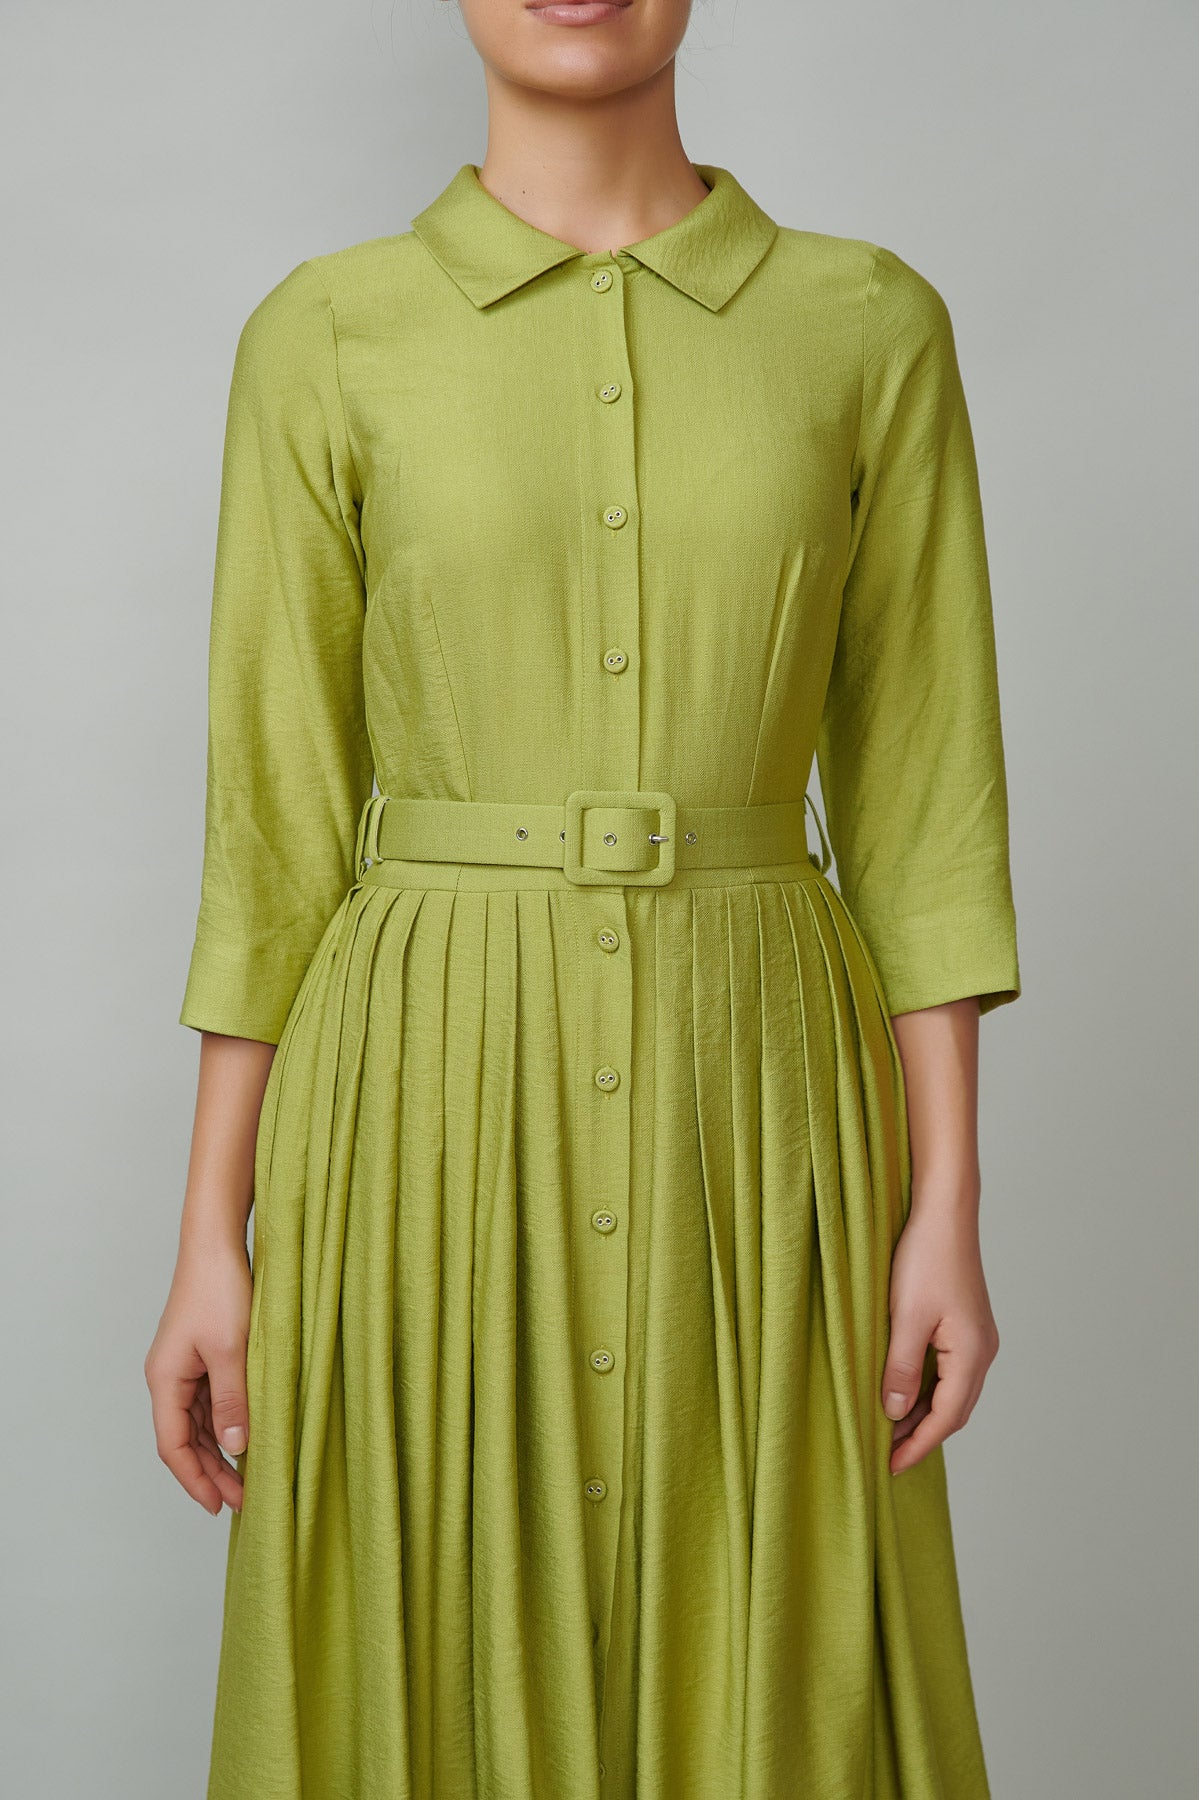 Olive green shirt dress